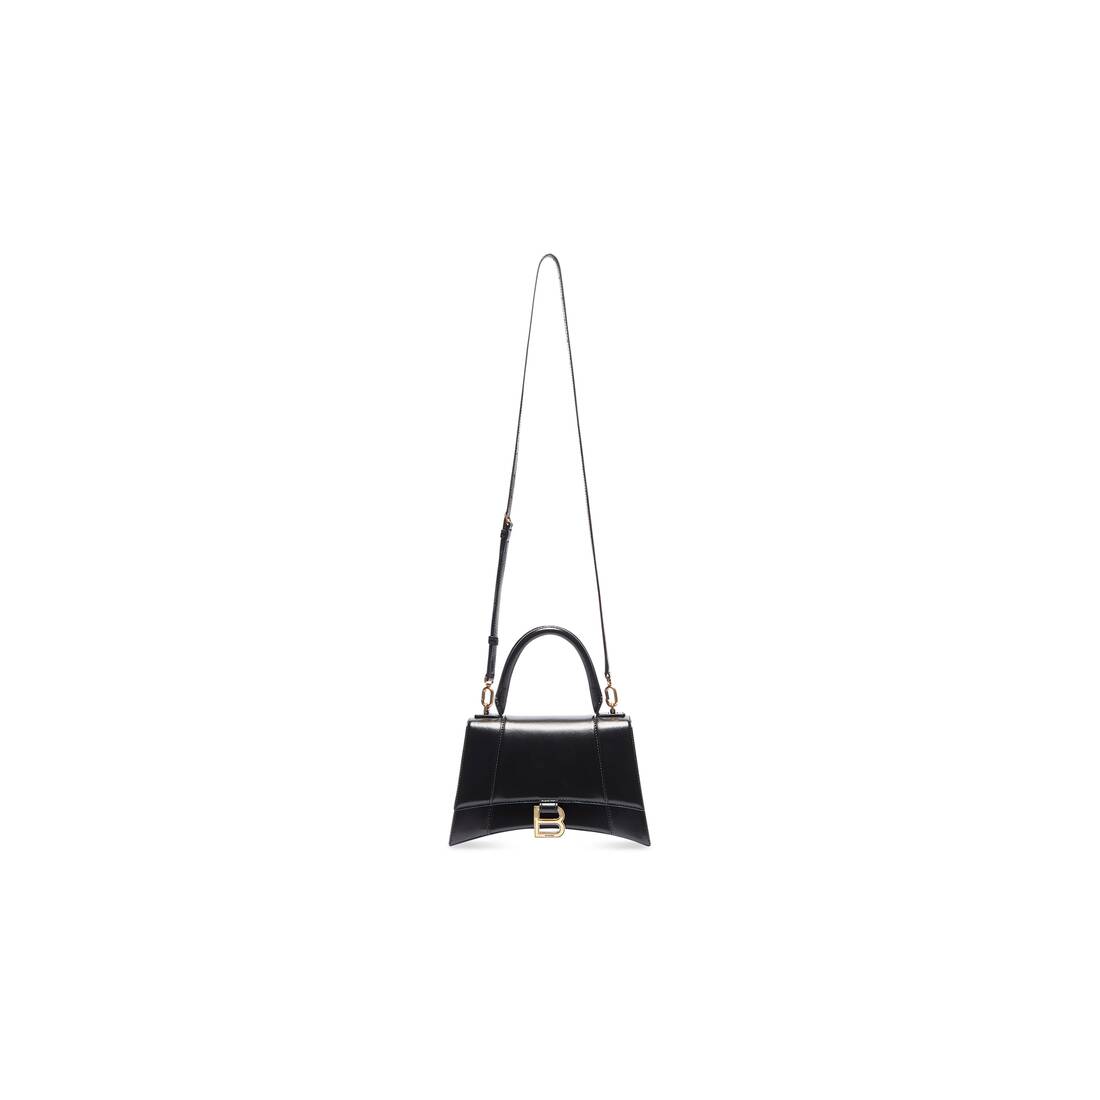 Hourglass Small Handbag in black shiny box calfskin